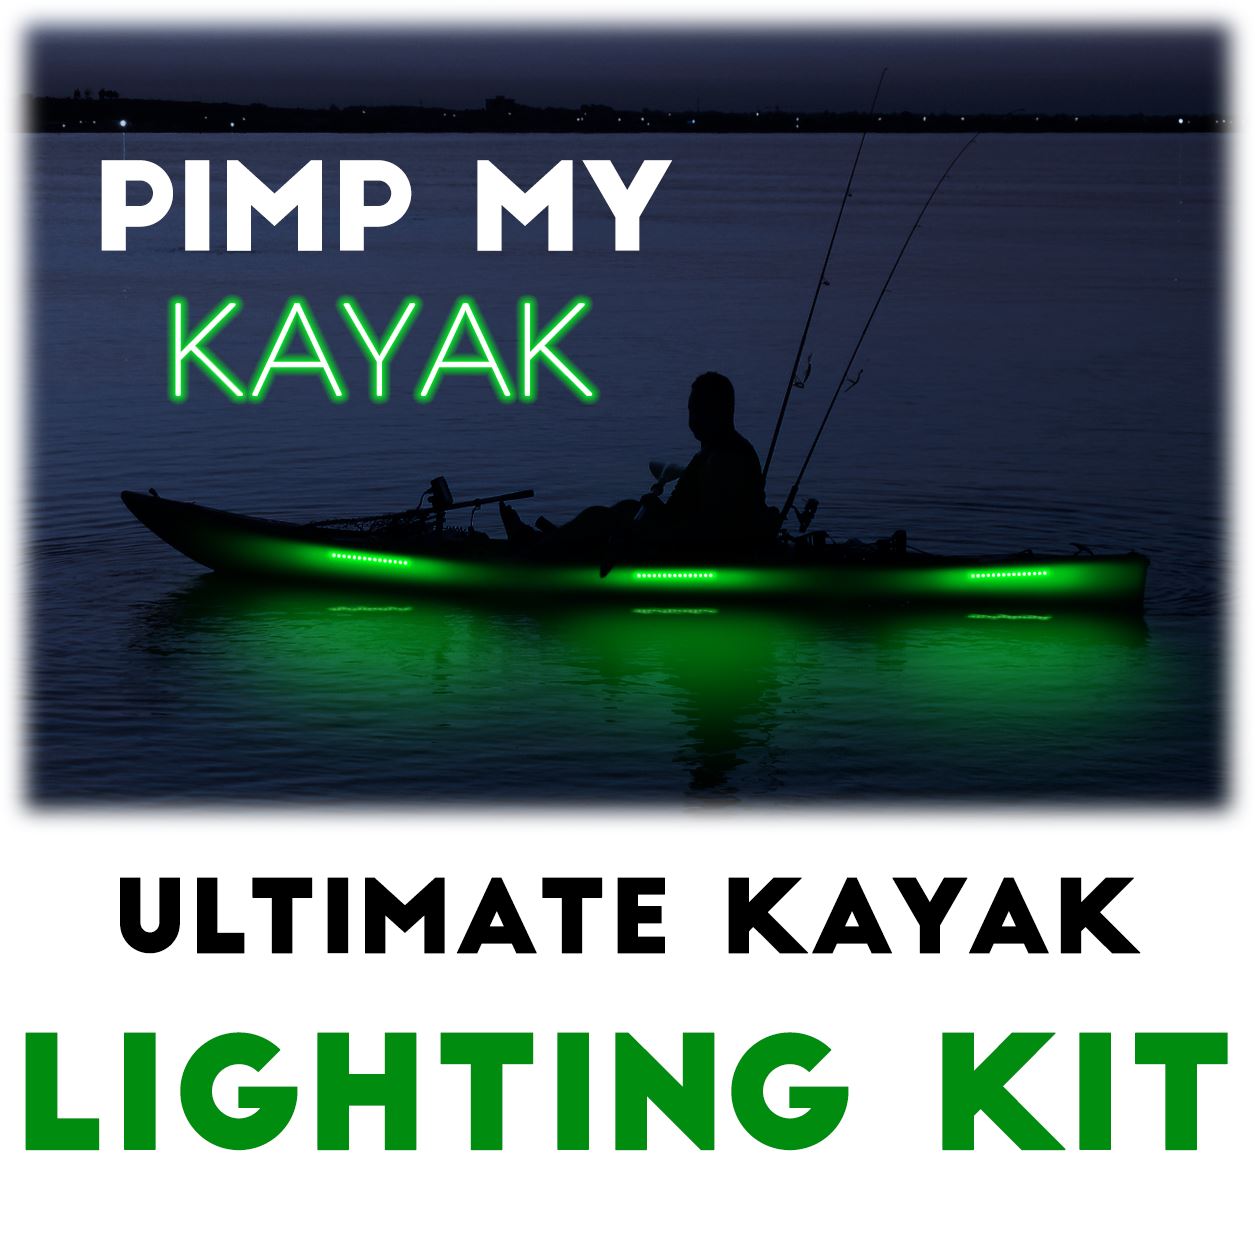 Pimp My Kayak - Green LED Lighting DIY Kit - 30,000 Lumens - Includes Red & Green Navigation Lights Pimp My Kayak Green Blob Outdoors 